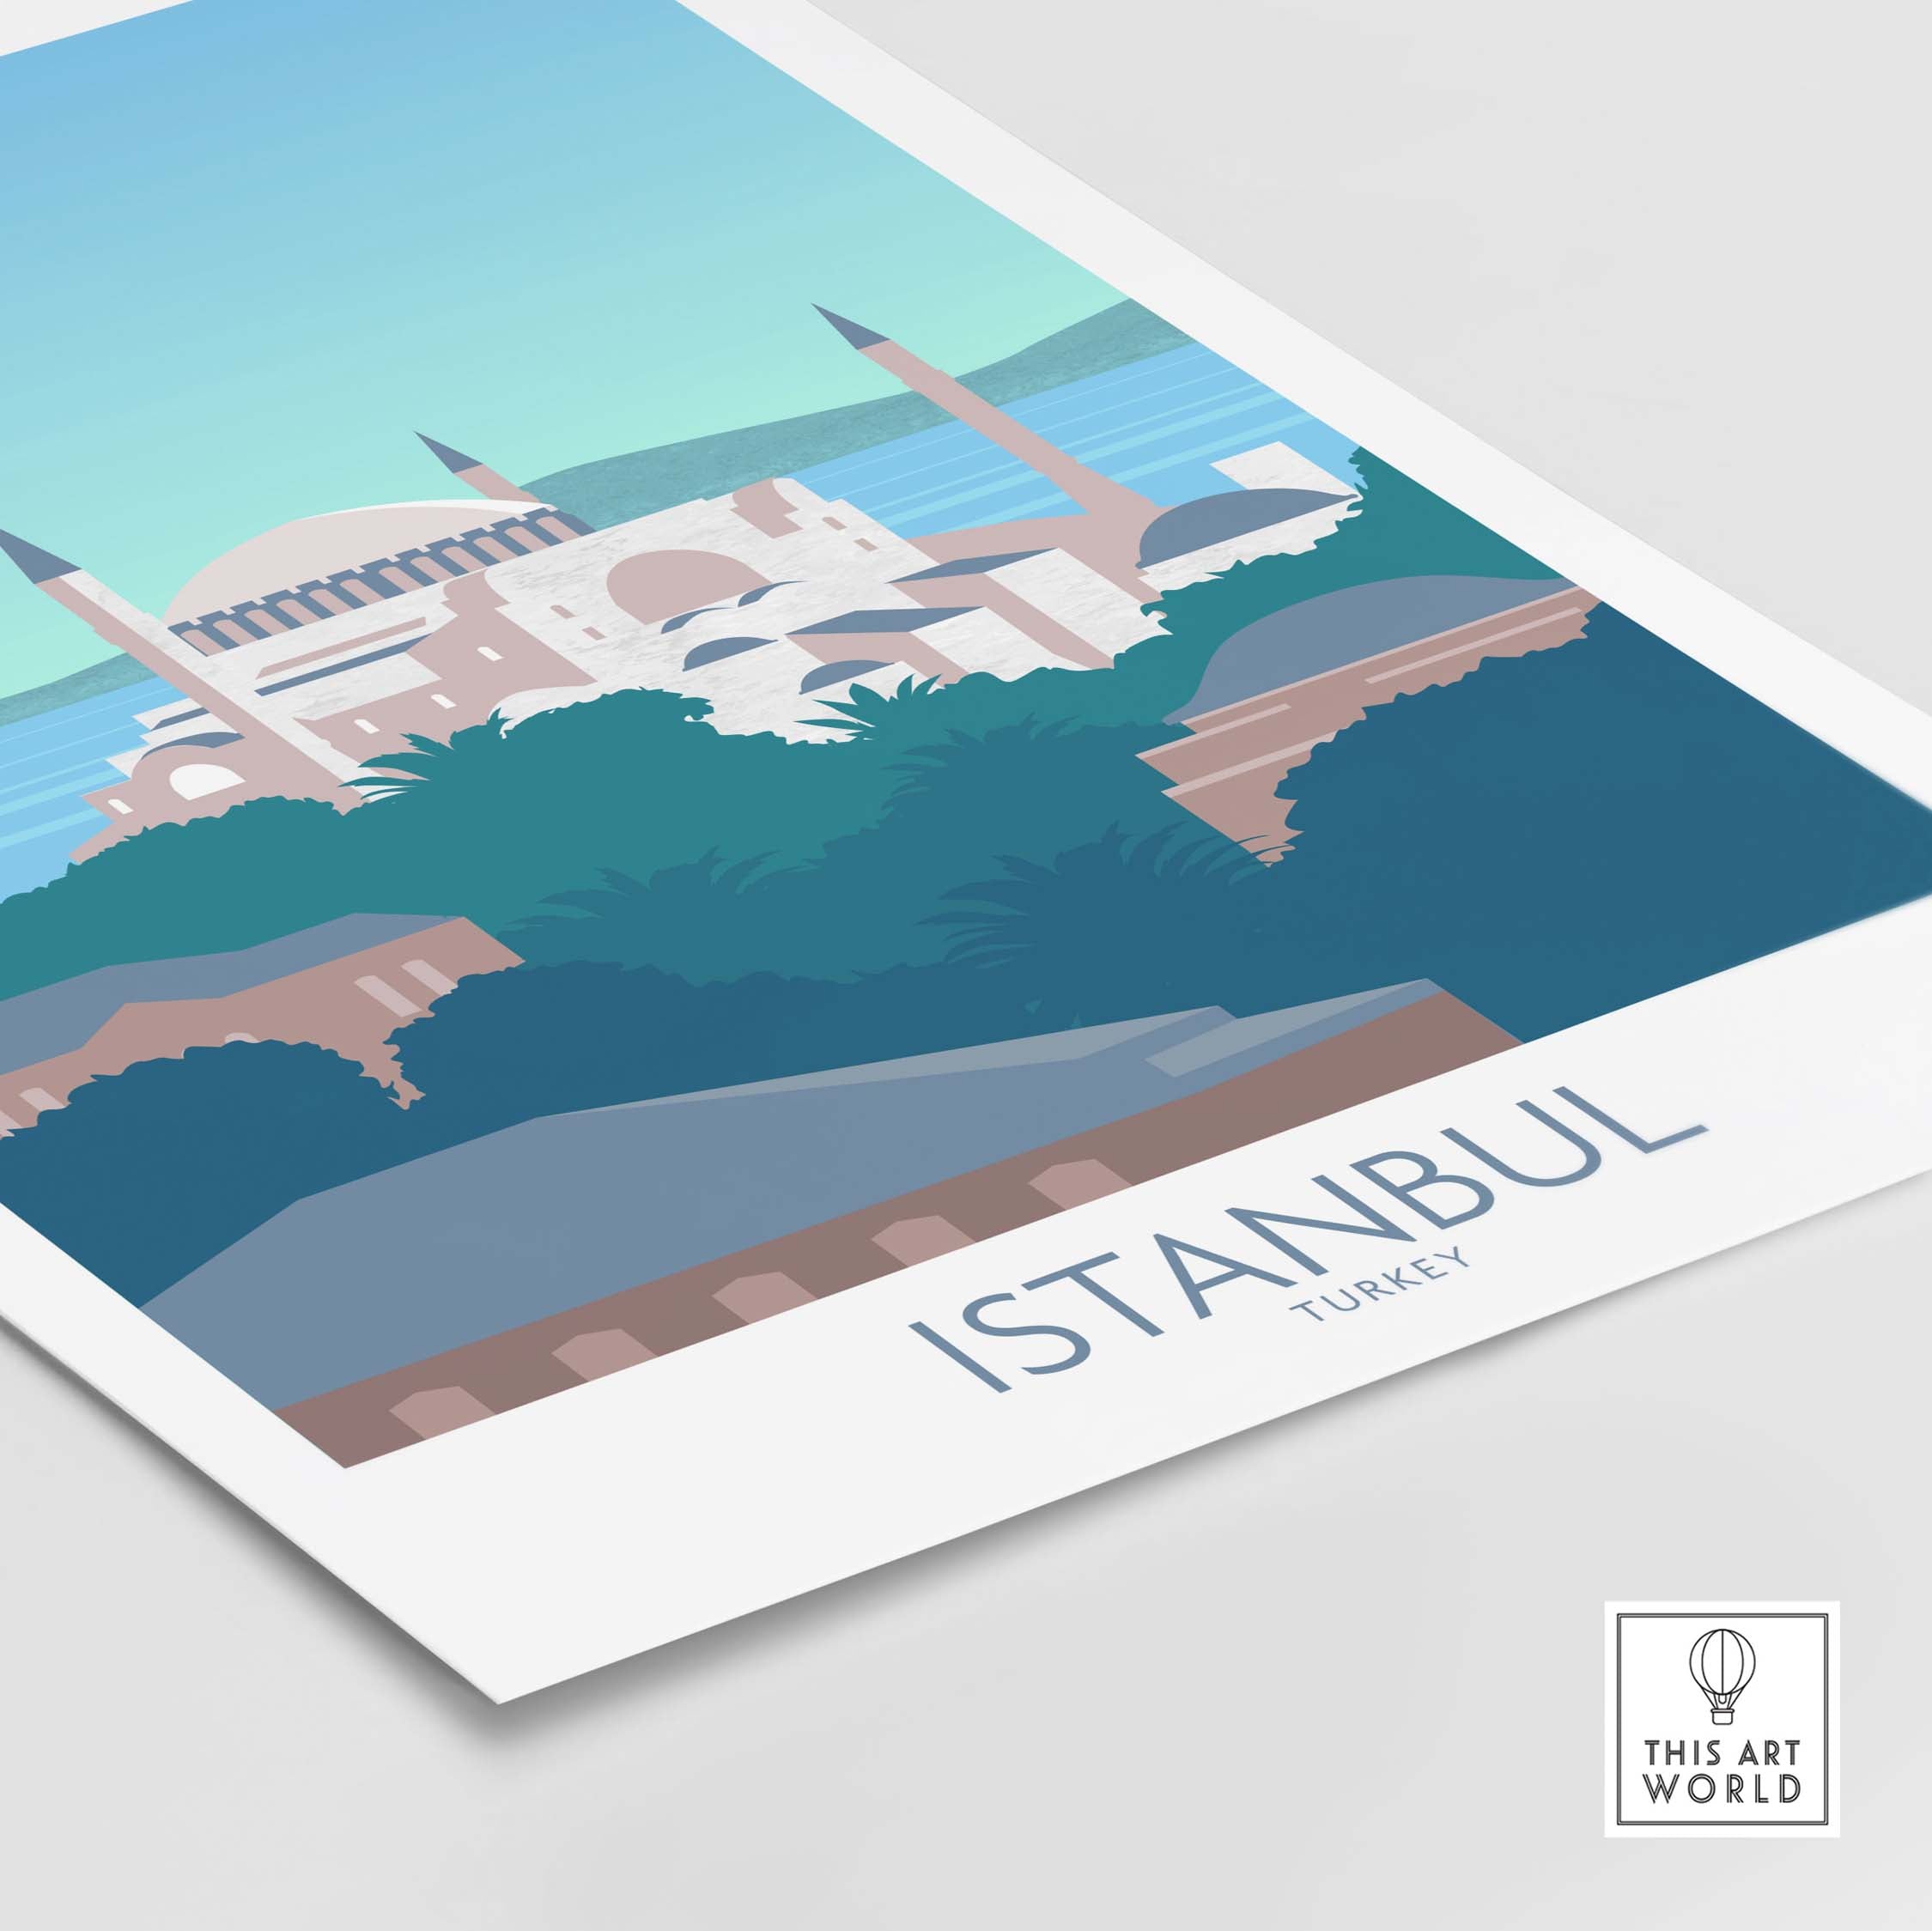 istanbul print travel poster